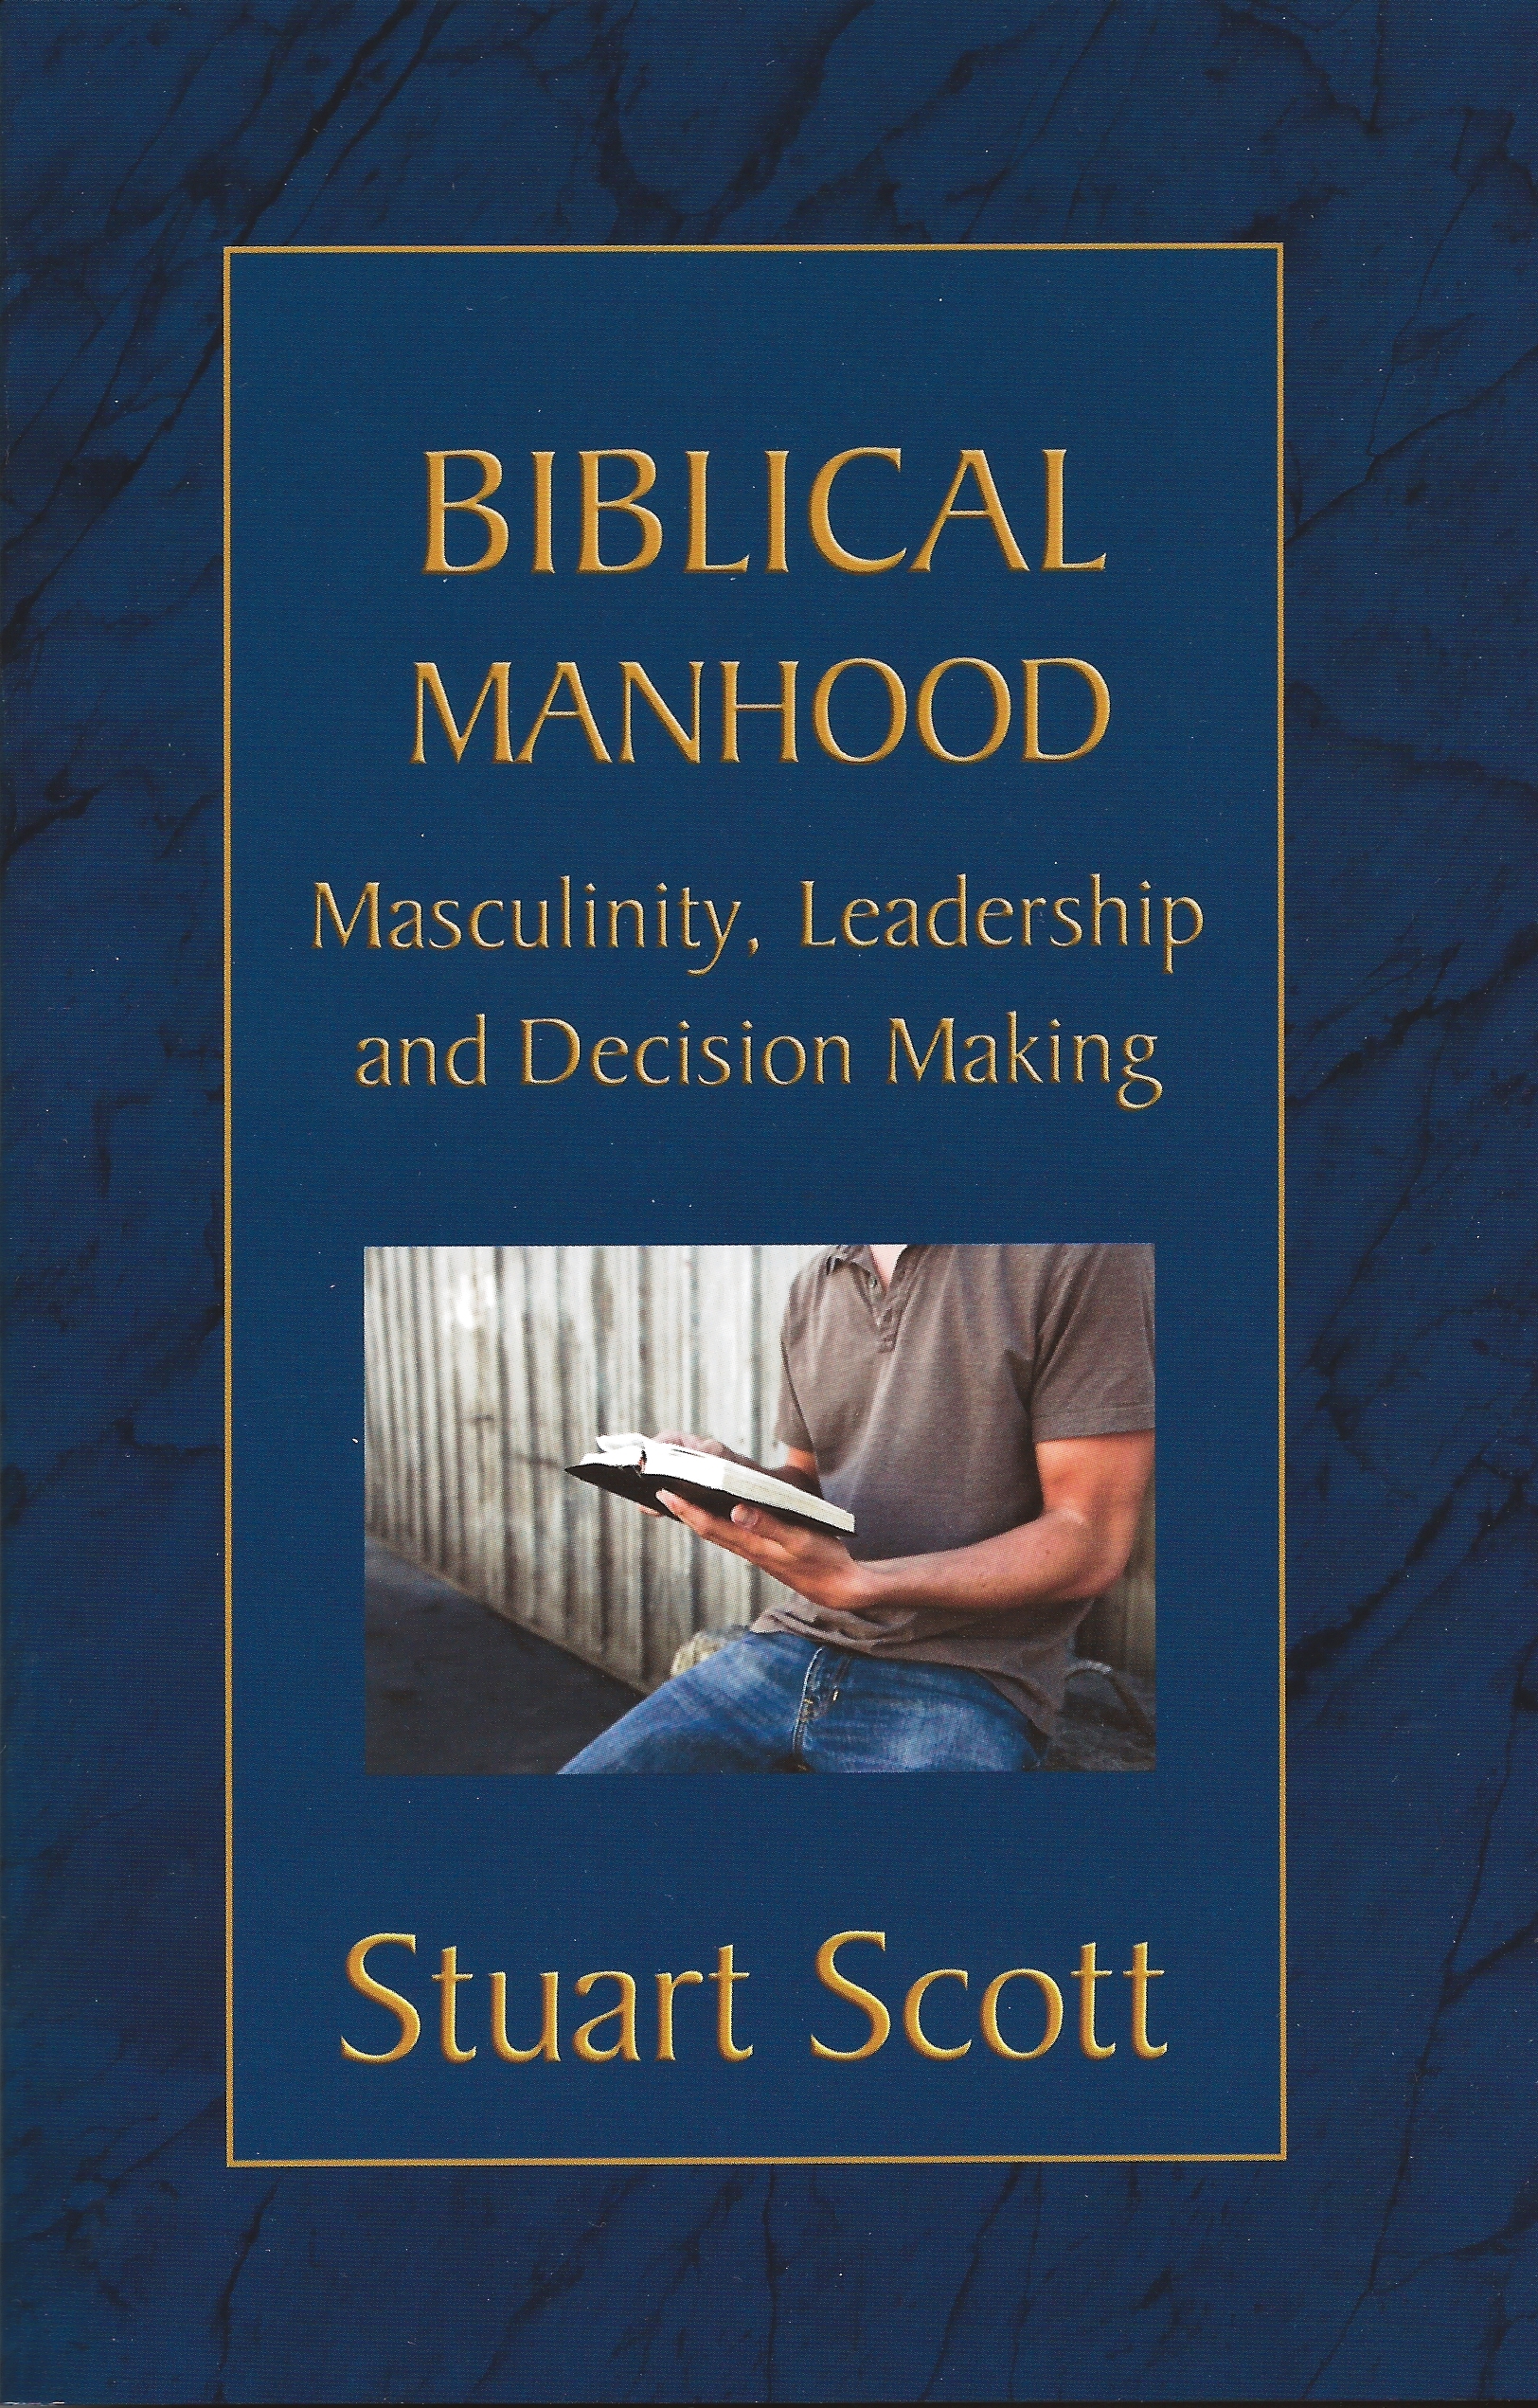 BIBLICAL MANHOOD Stuart Scott